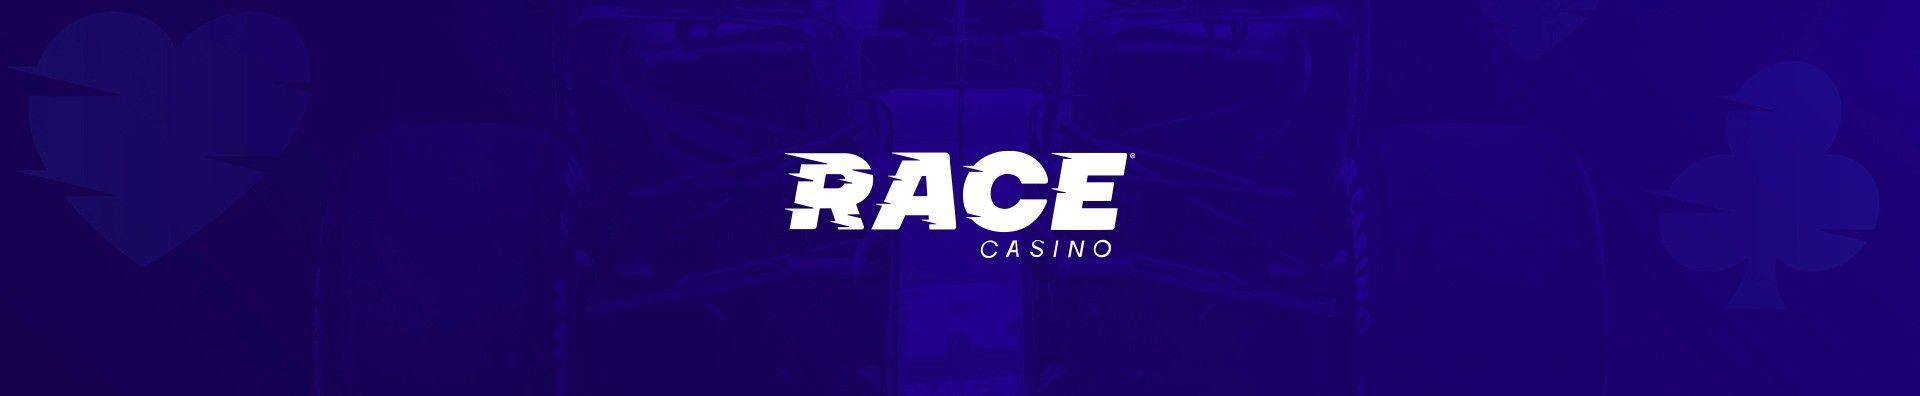 Bla banner med vit text Race Casino